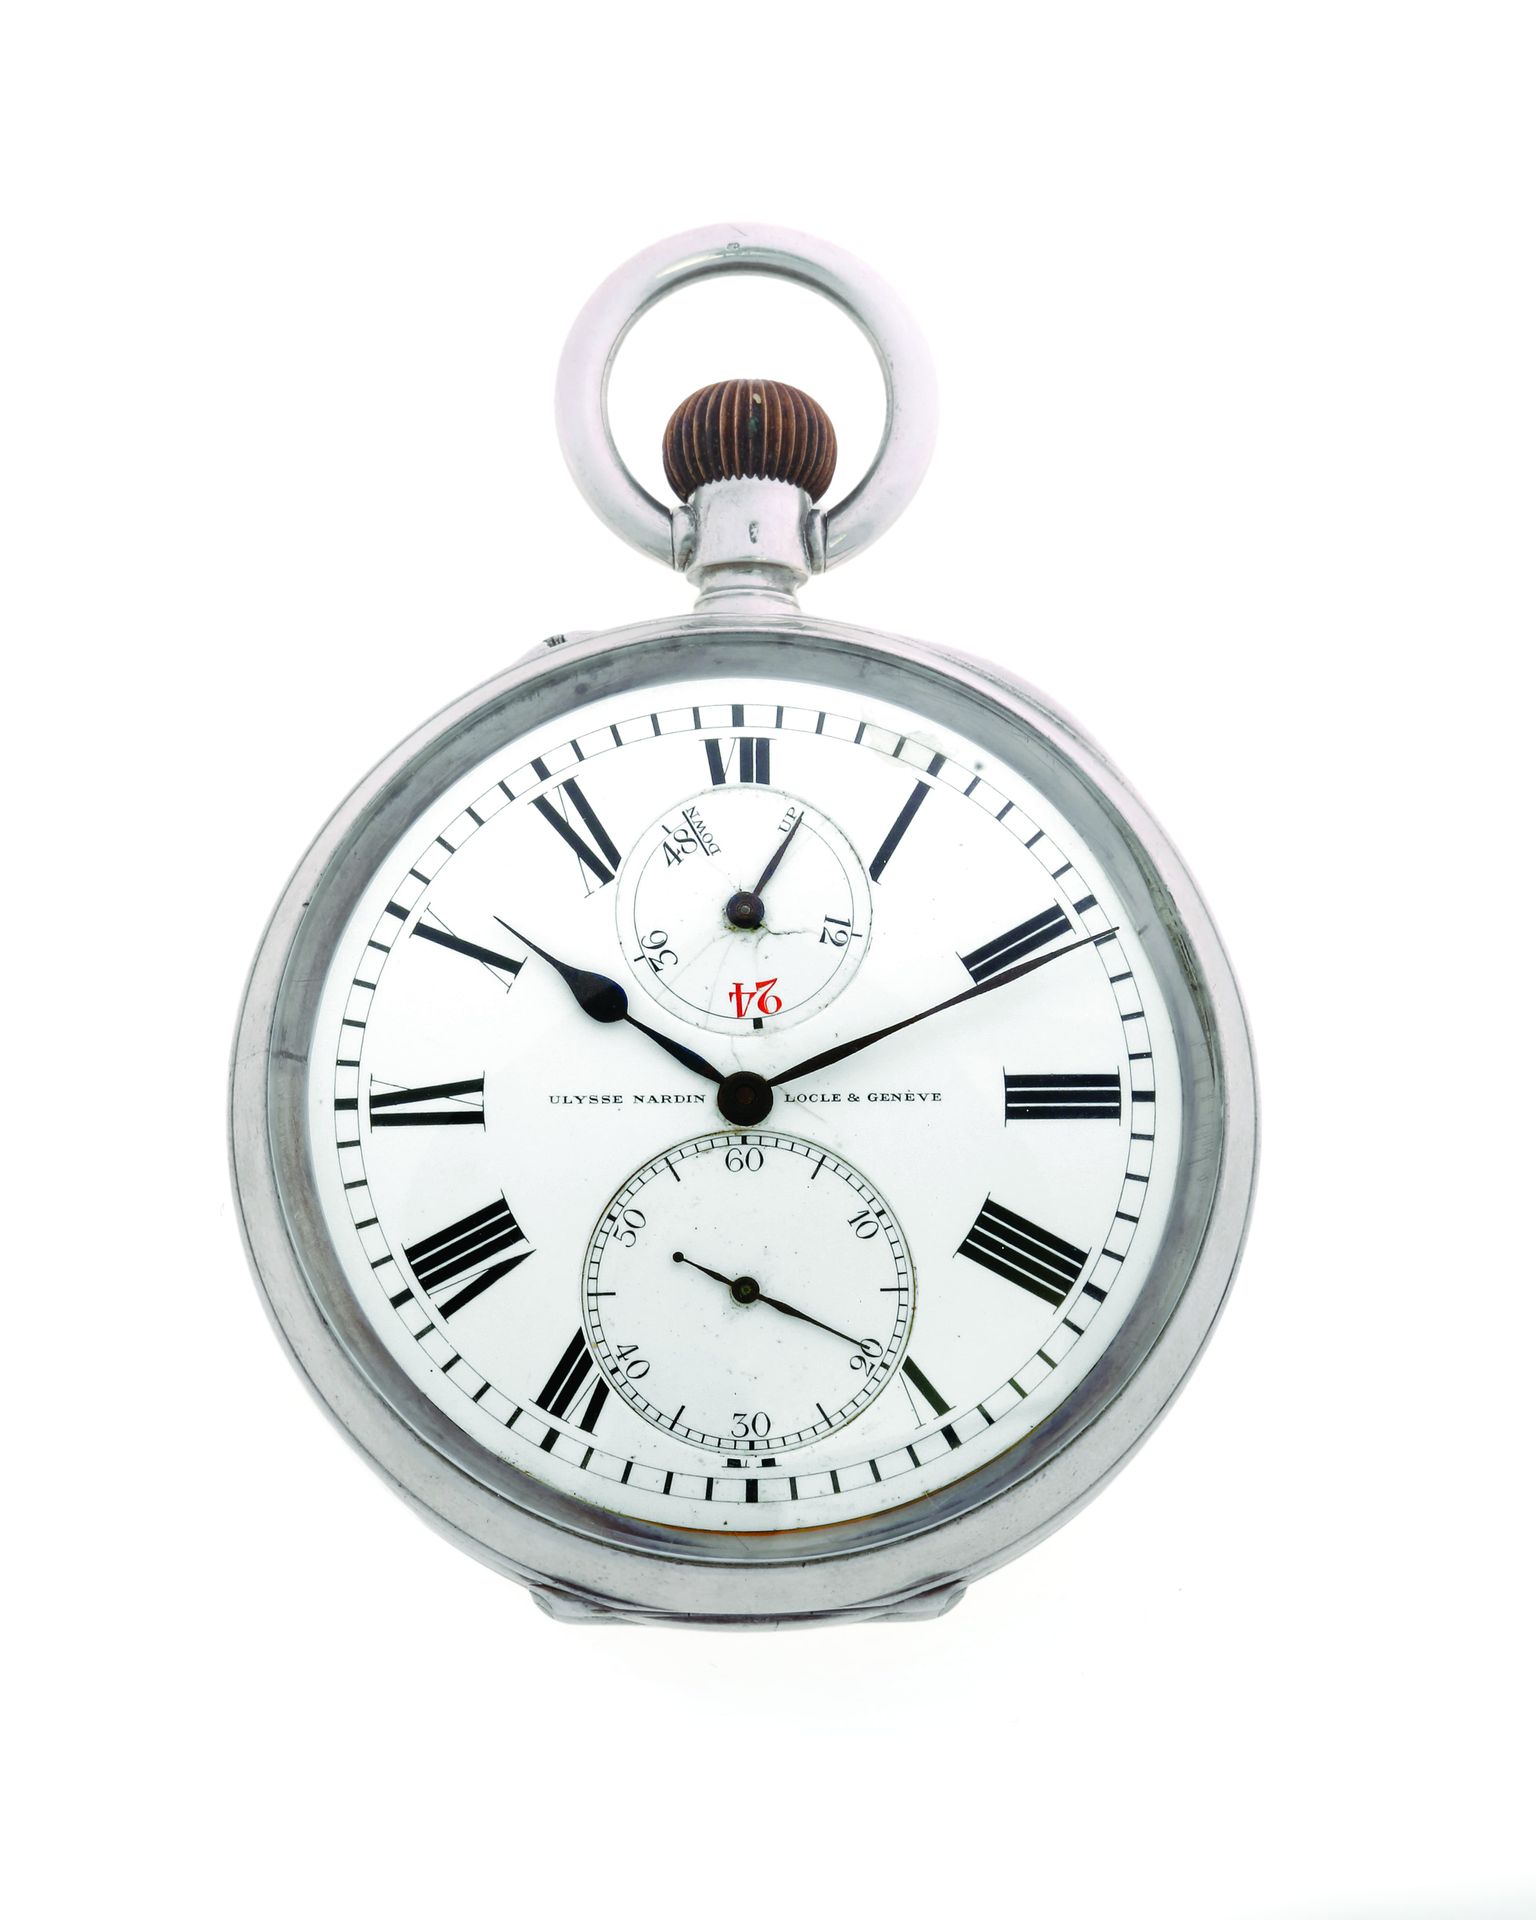 ULYSSE NARDIN US NAVY - N°15591
900 thousandths silver pocket watch with mechani&hellip;